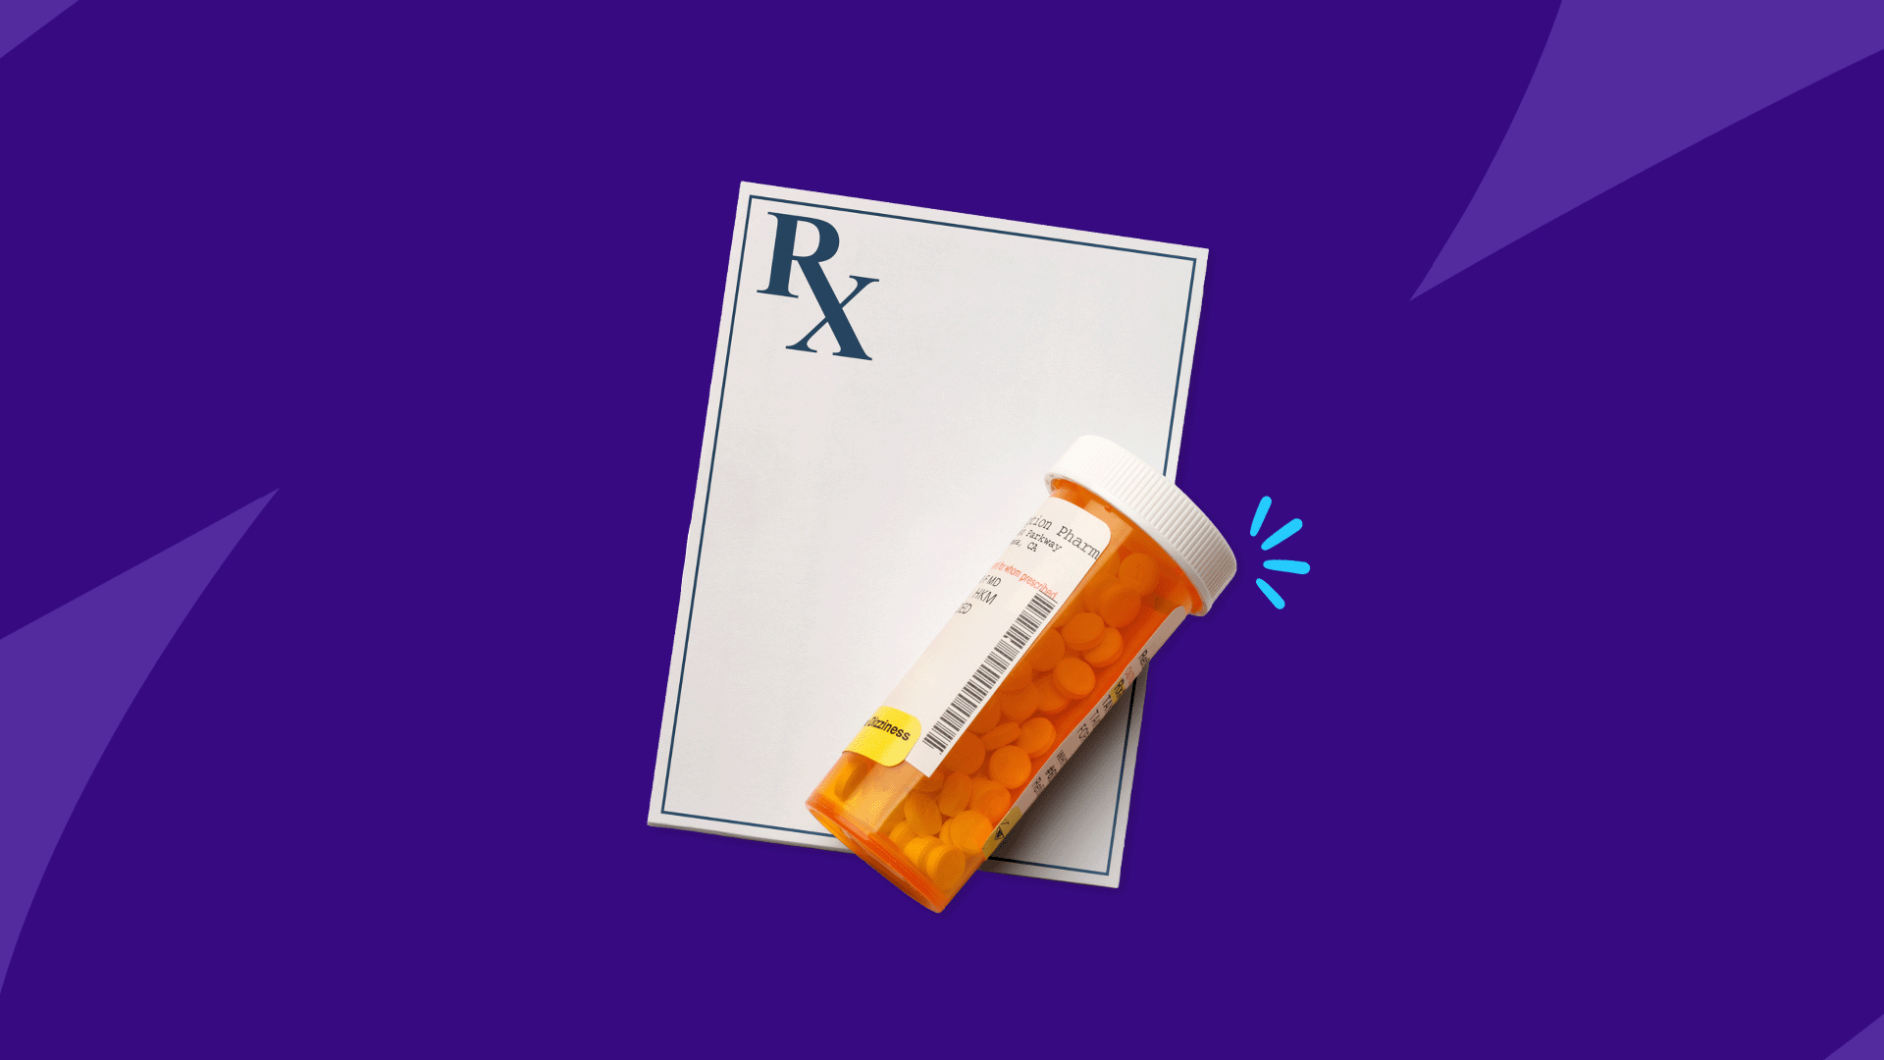 Rx prescription pad and Rx pill bottle: Nexium generic